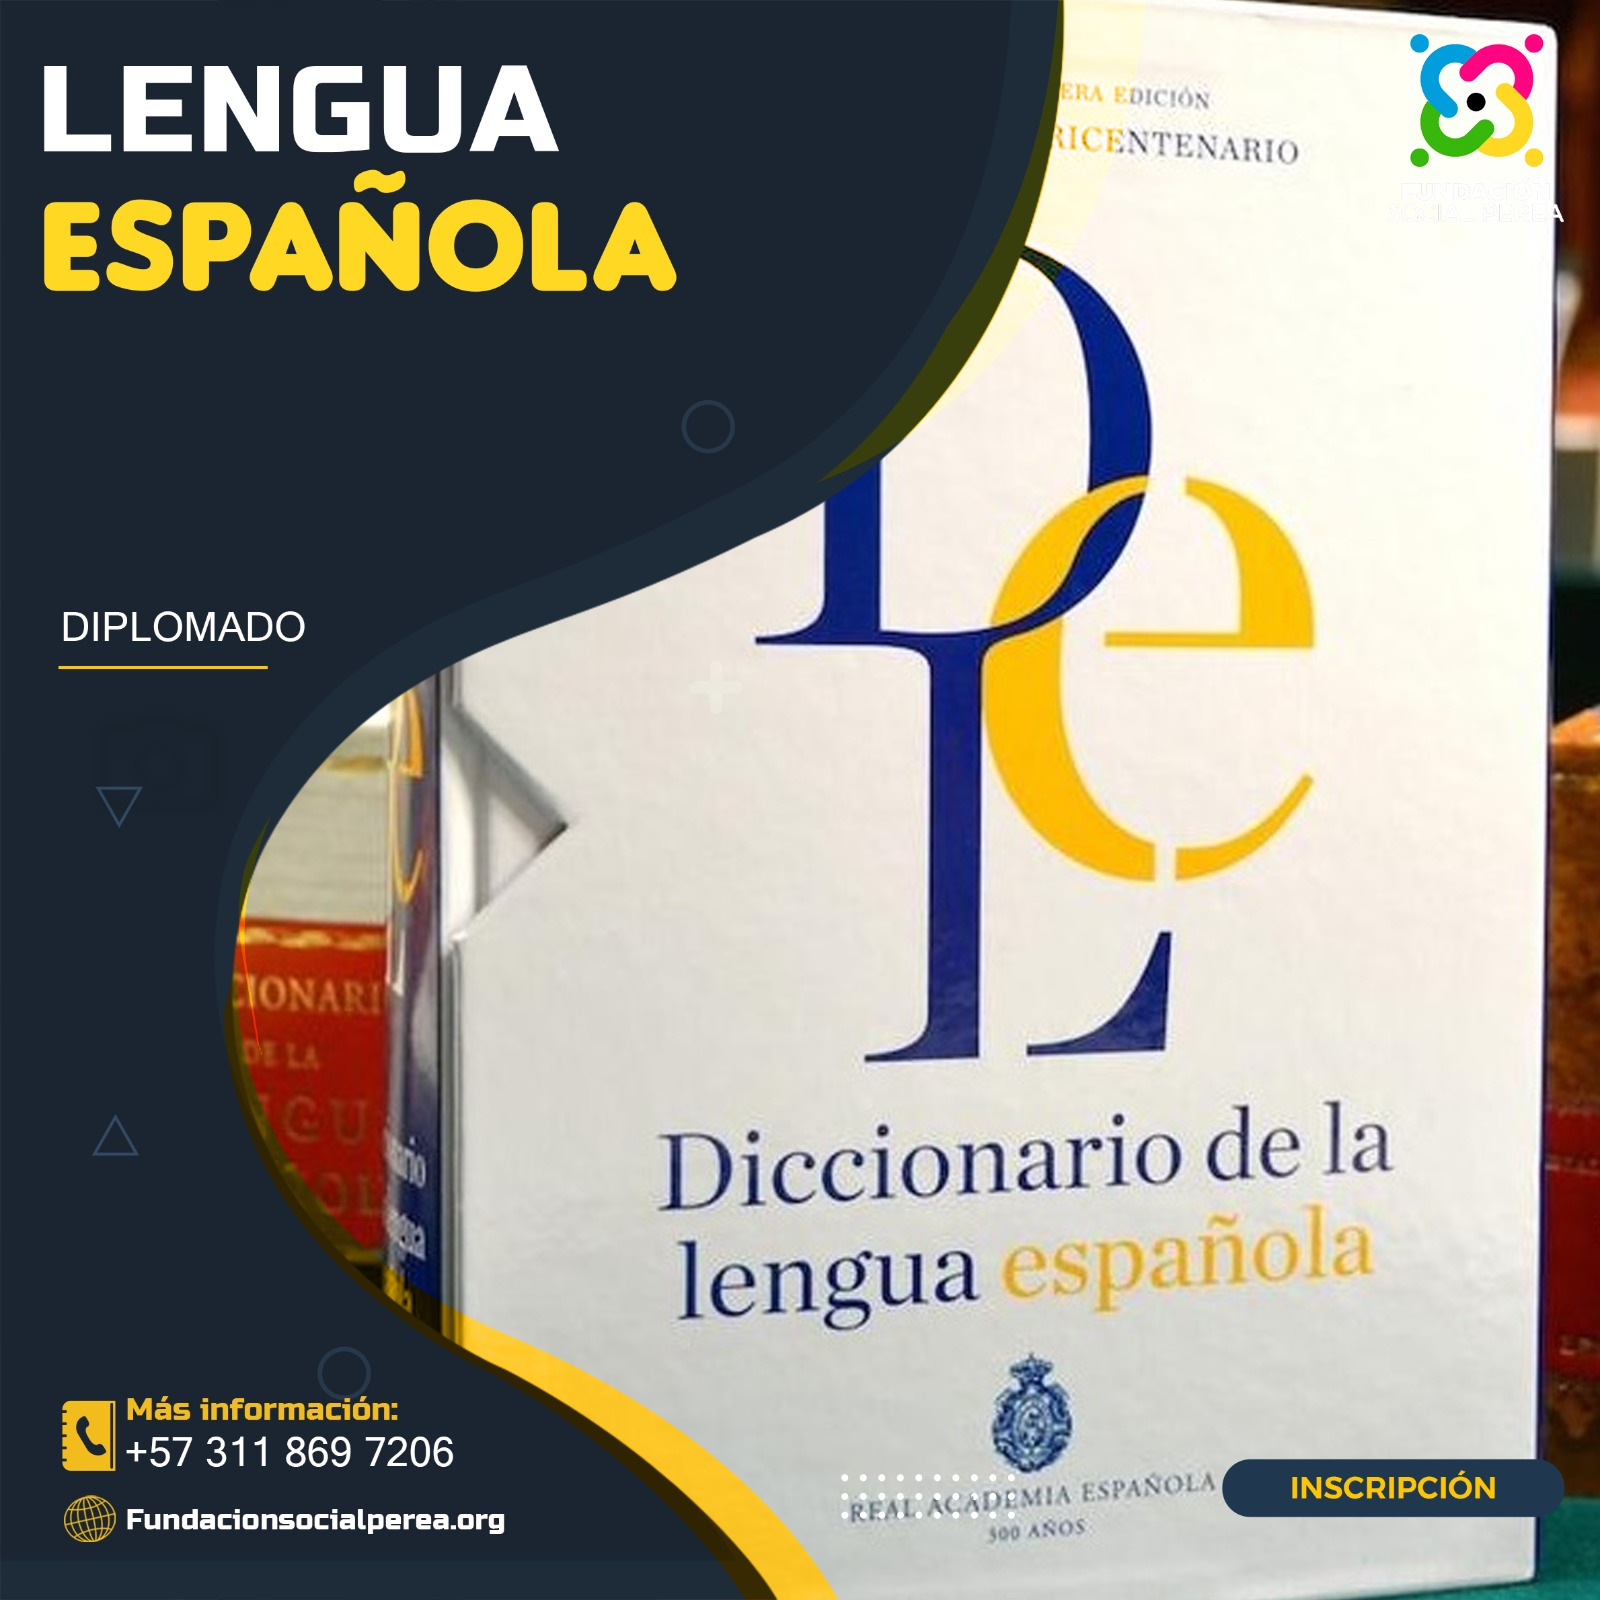 Lengua Española